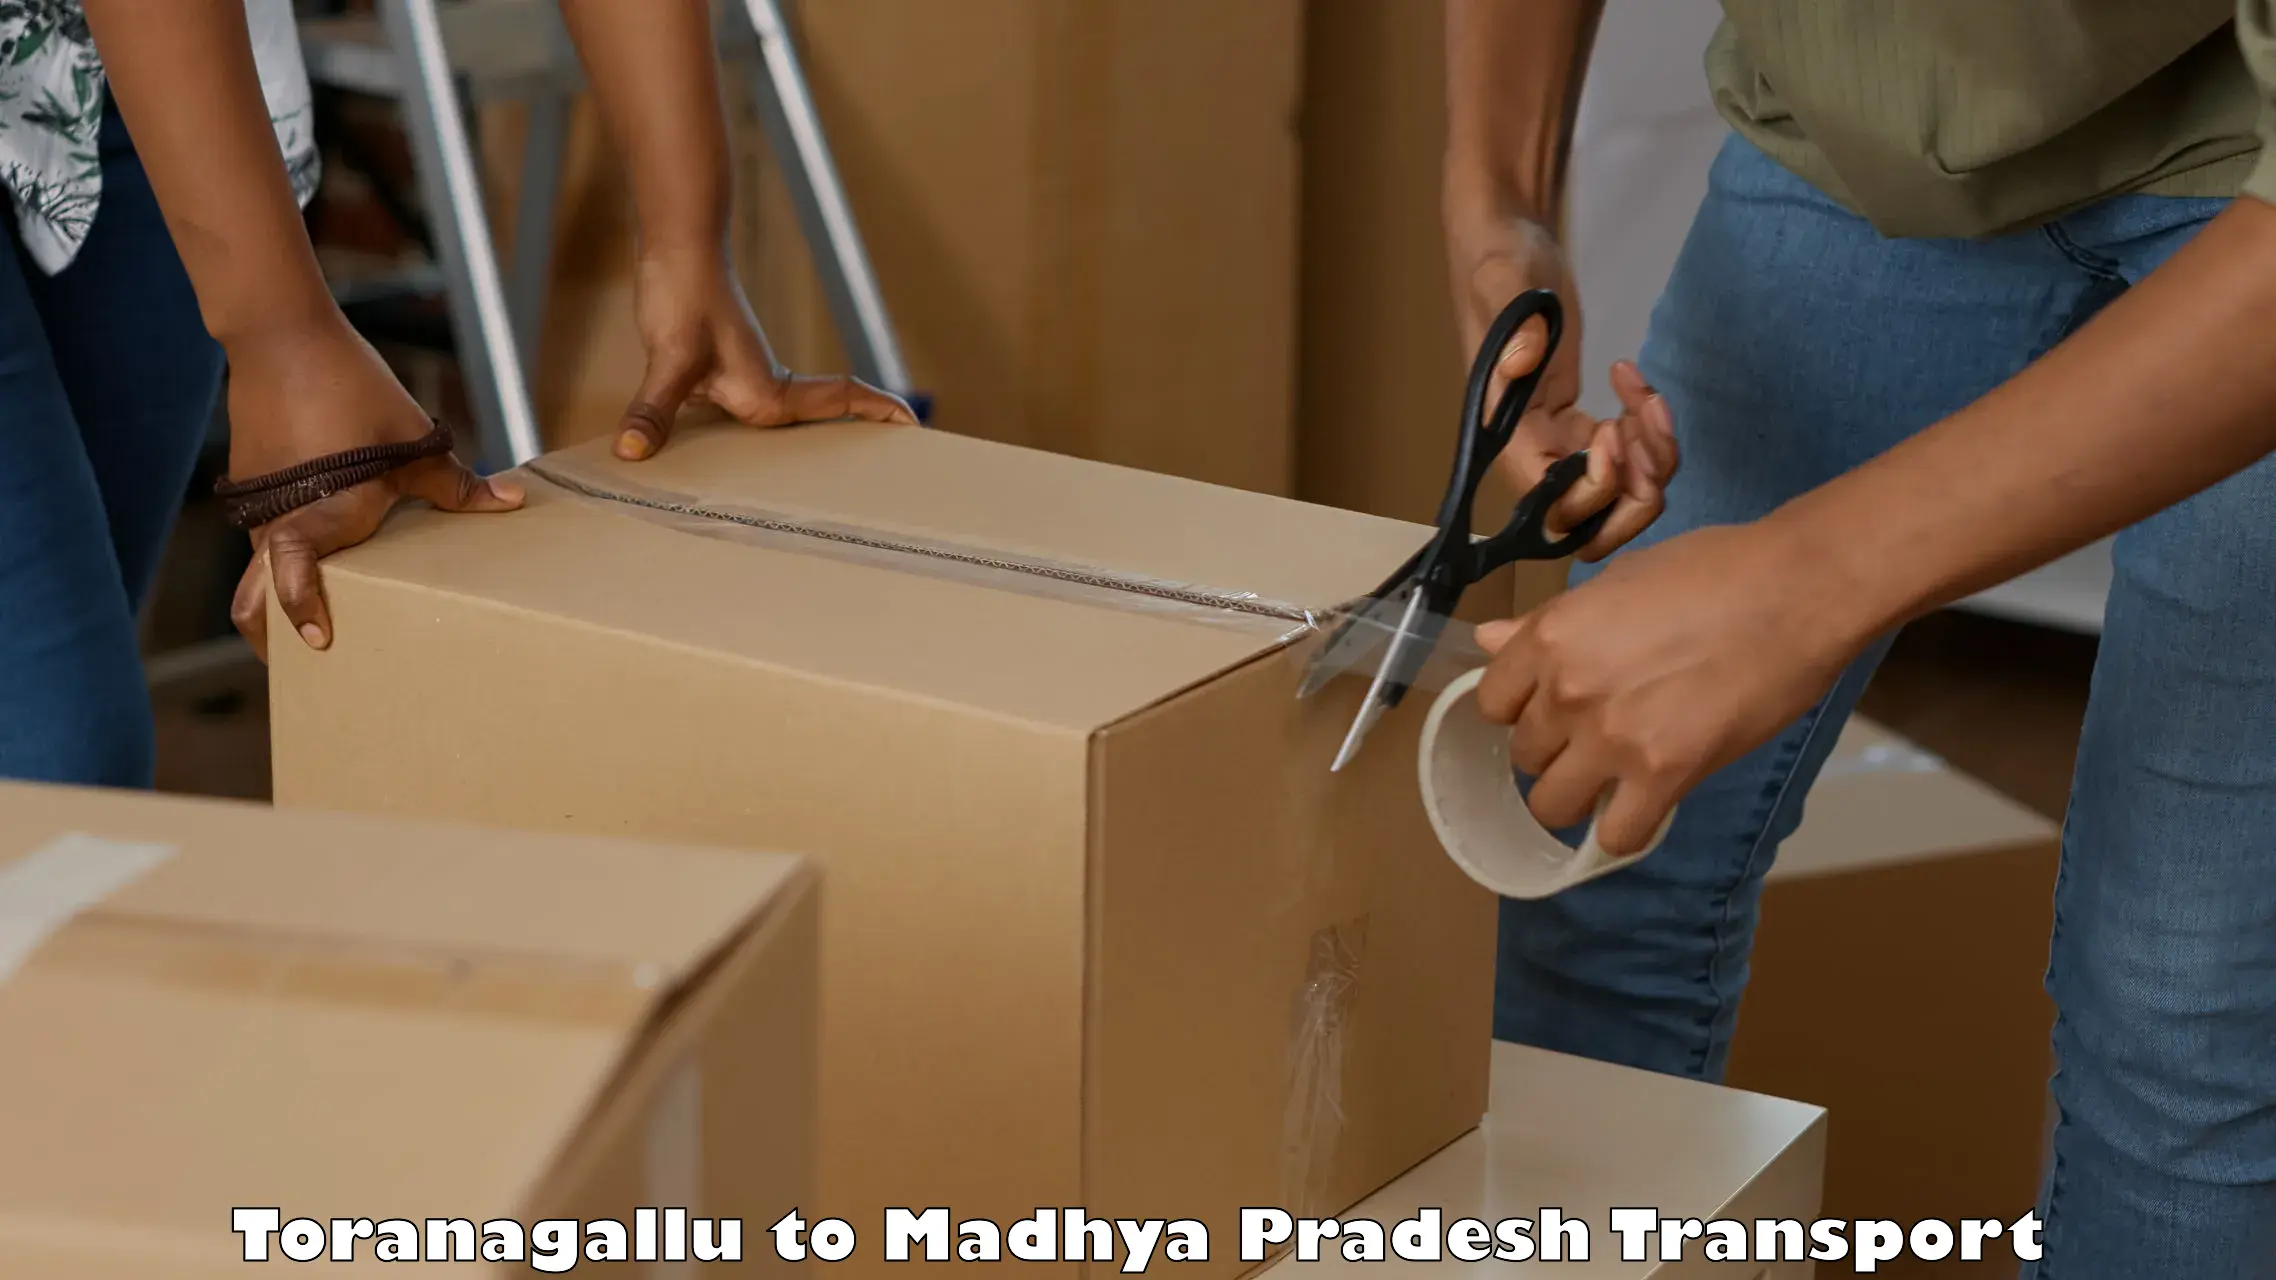 Truck transport companies in India Toranagallu to Khategaon